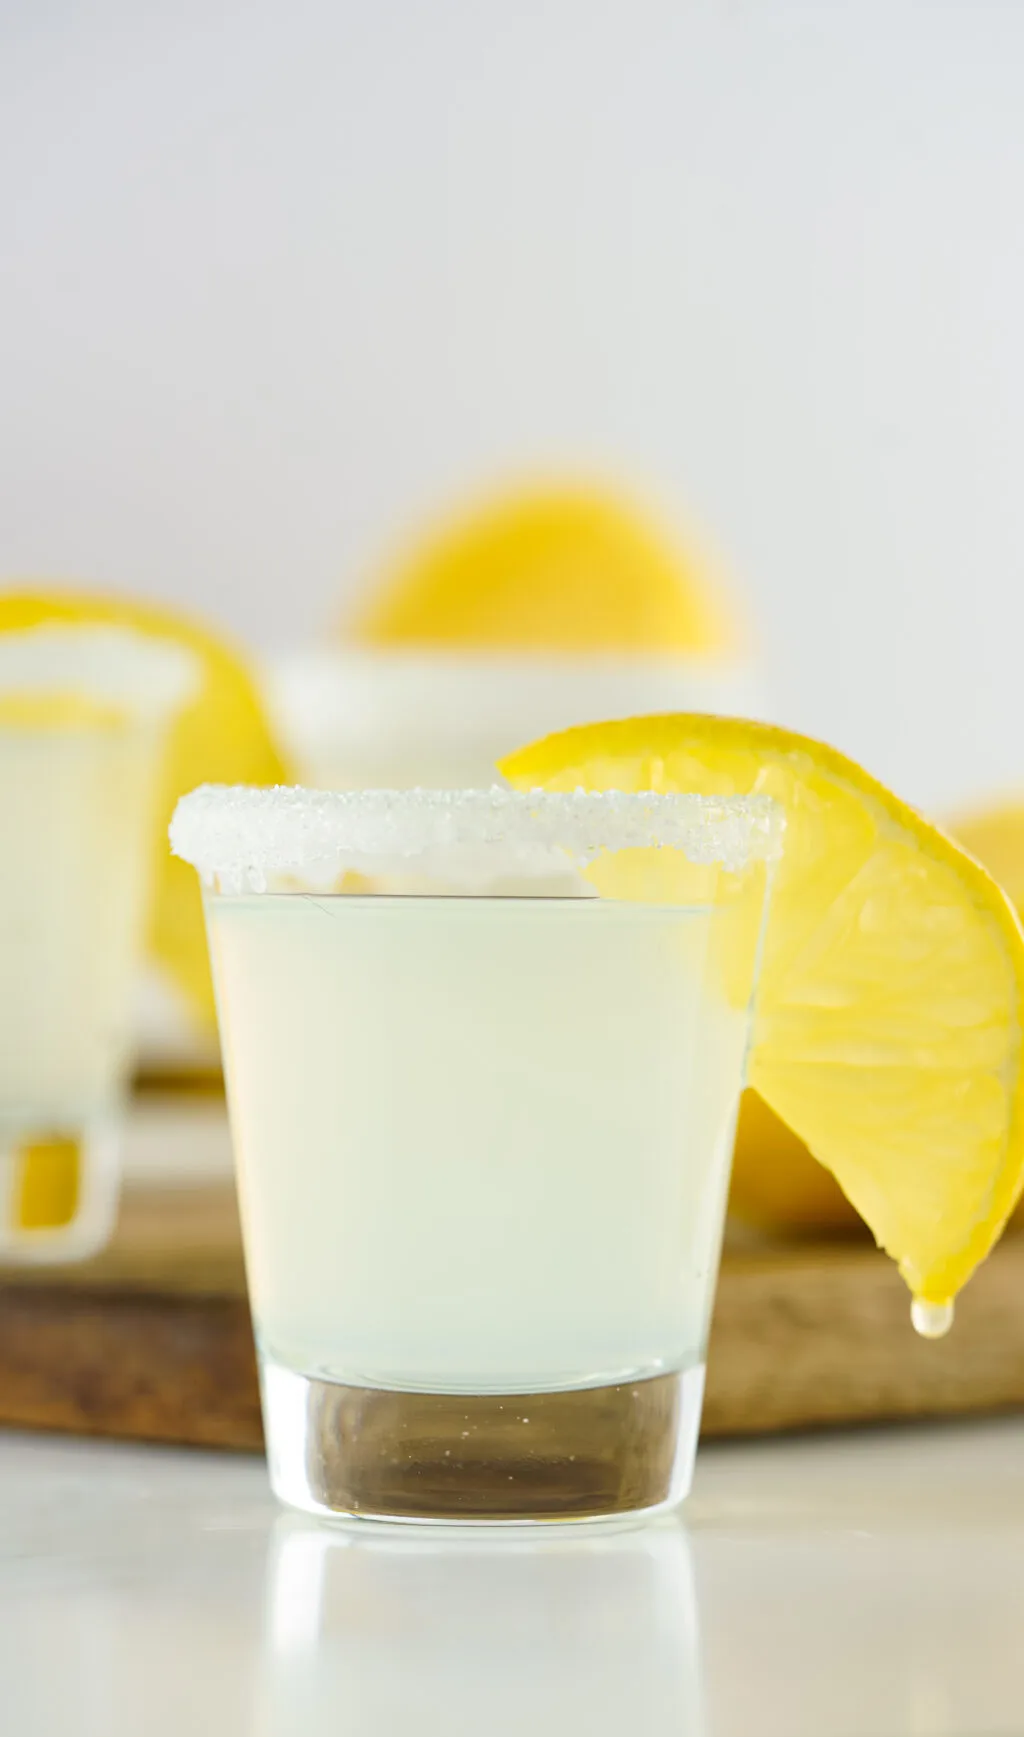 lemon drop shot with lemon dripping on white table